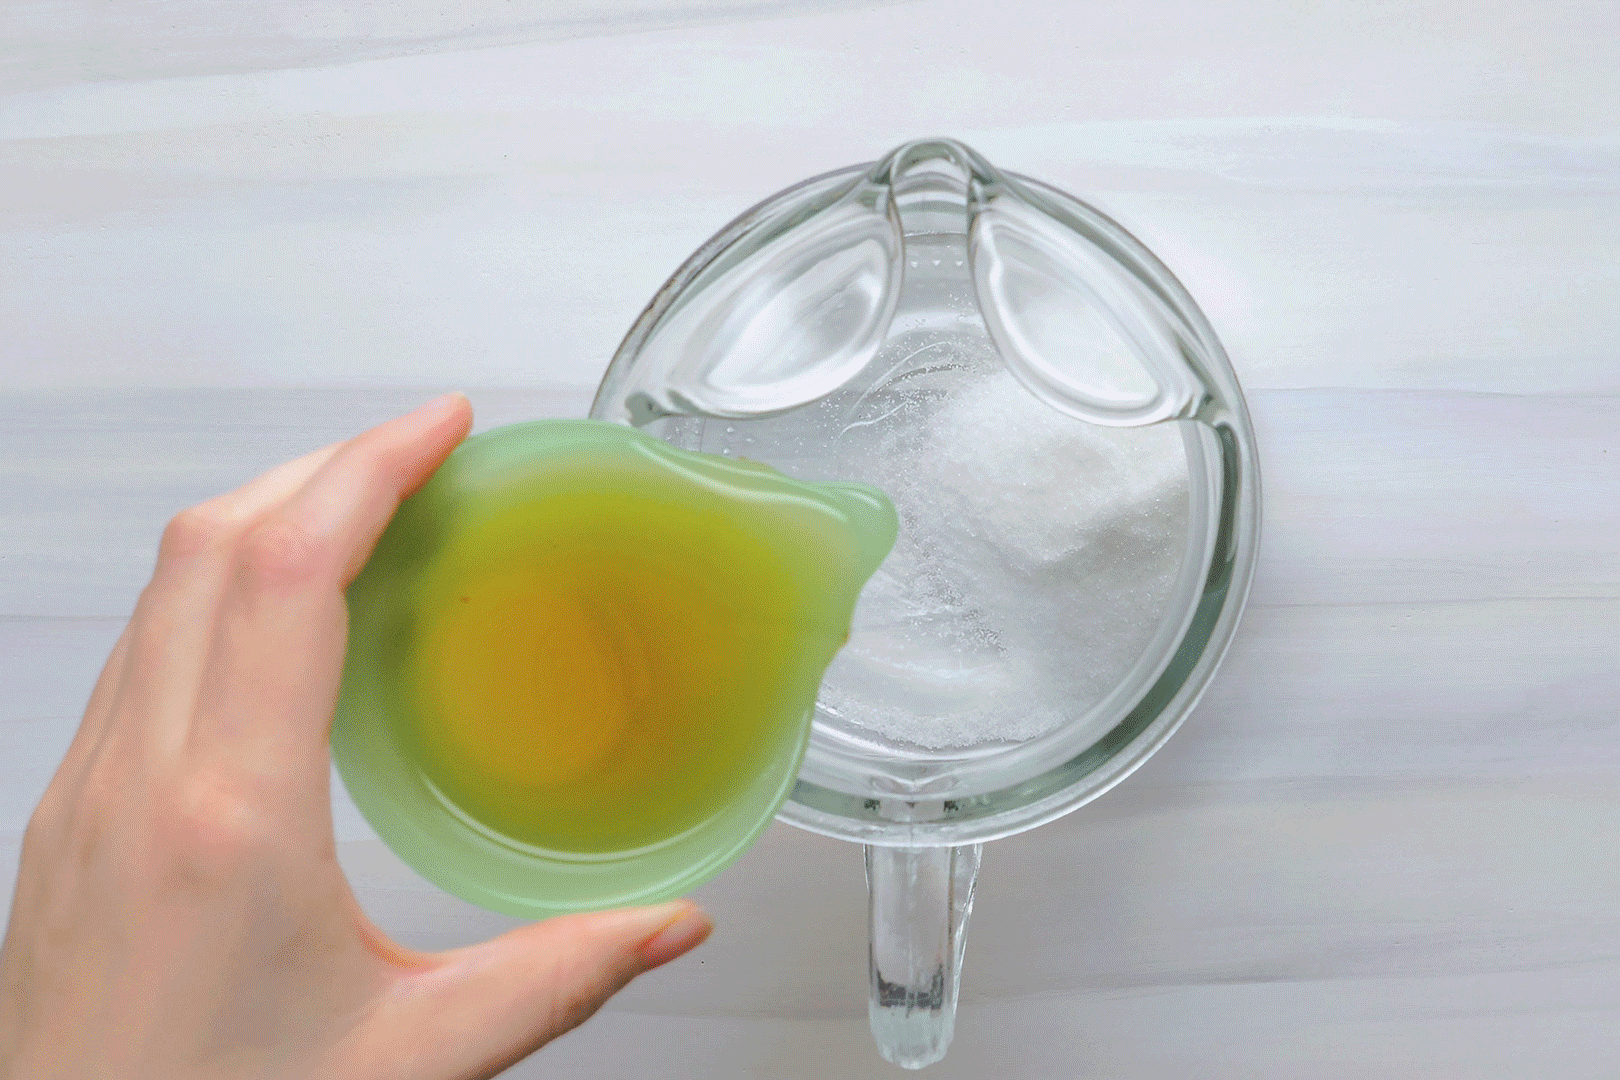 Adding lemon juice to jug